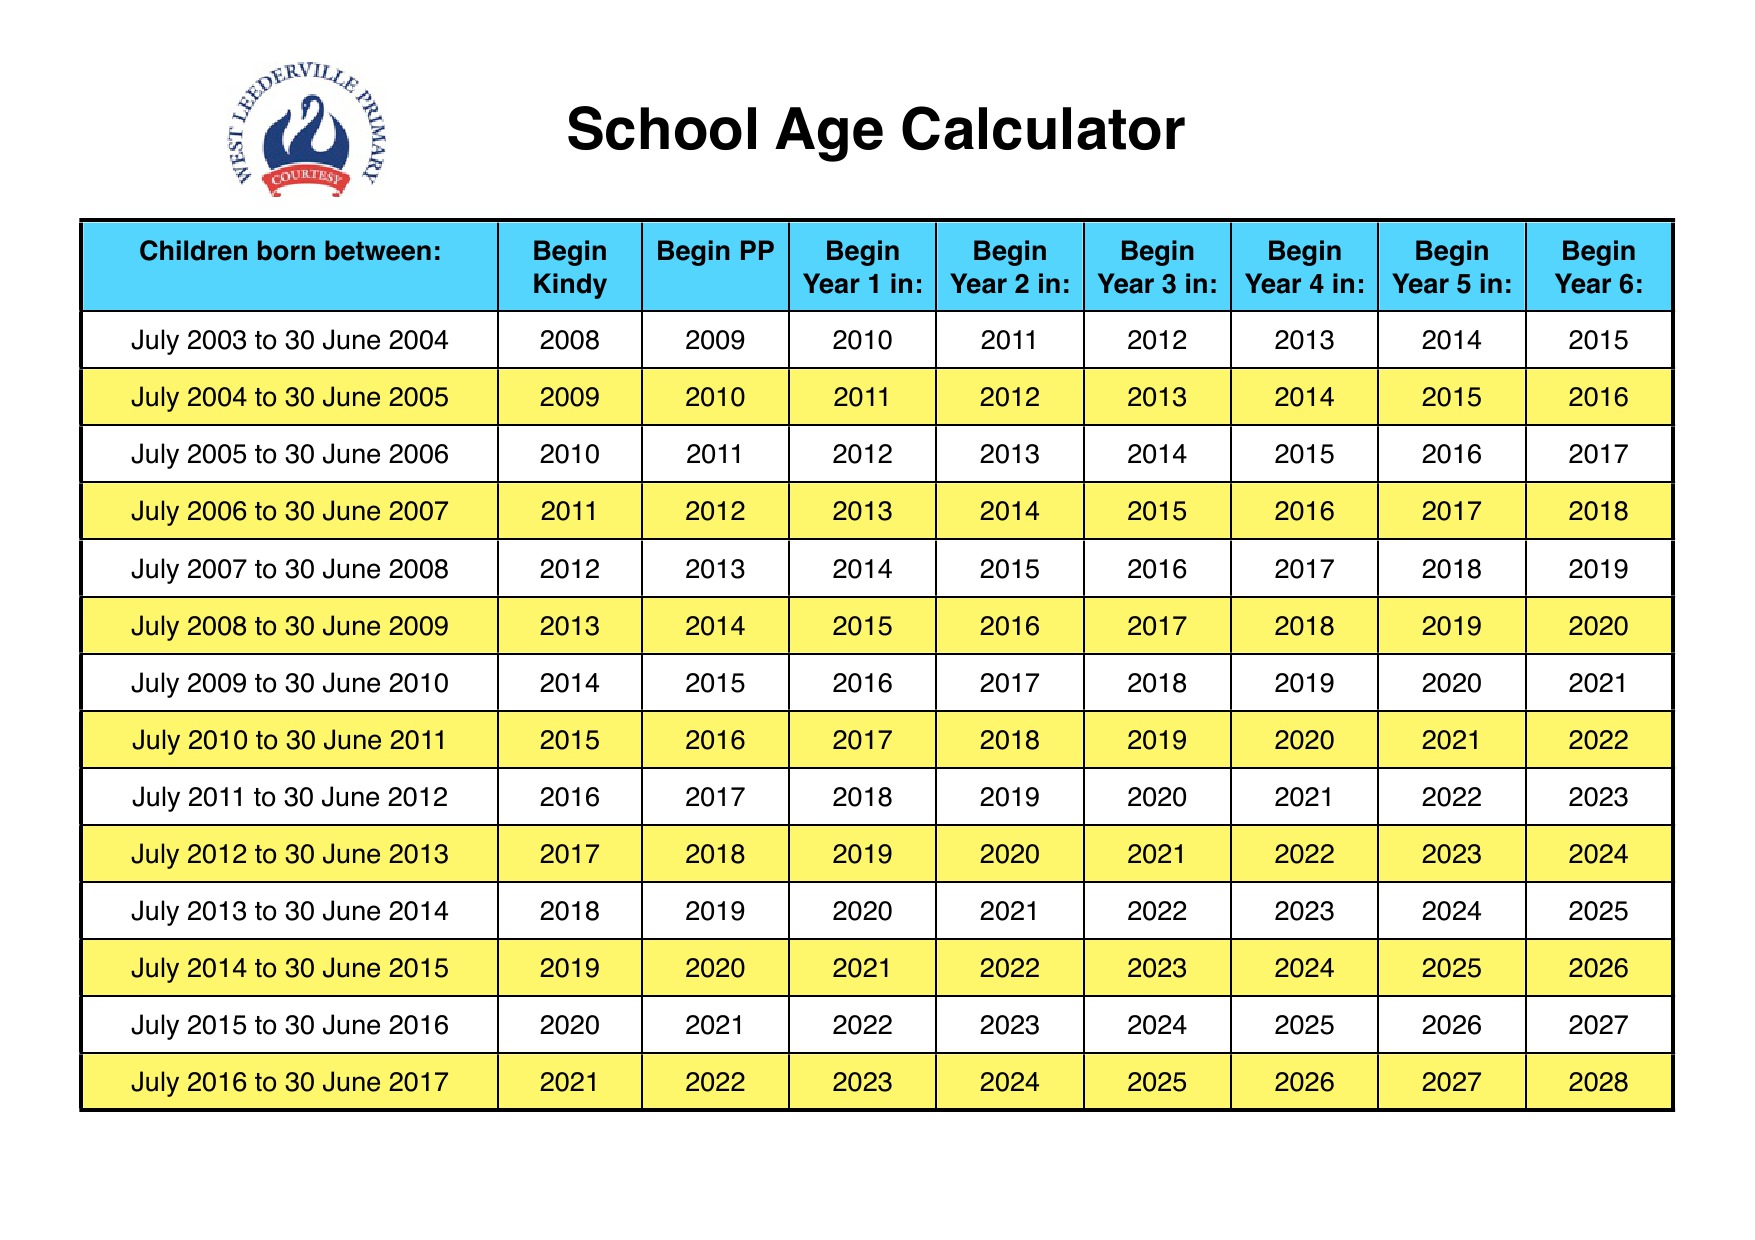 School Age Calculator WLPS